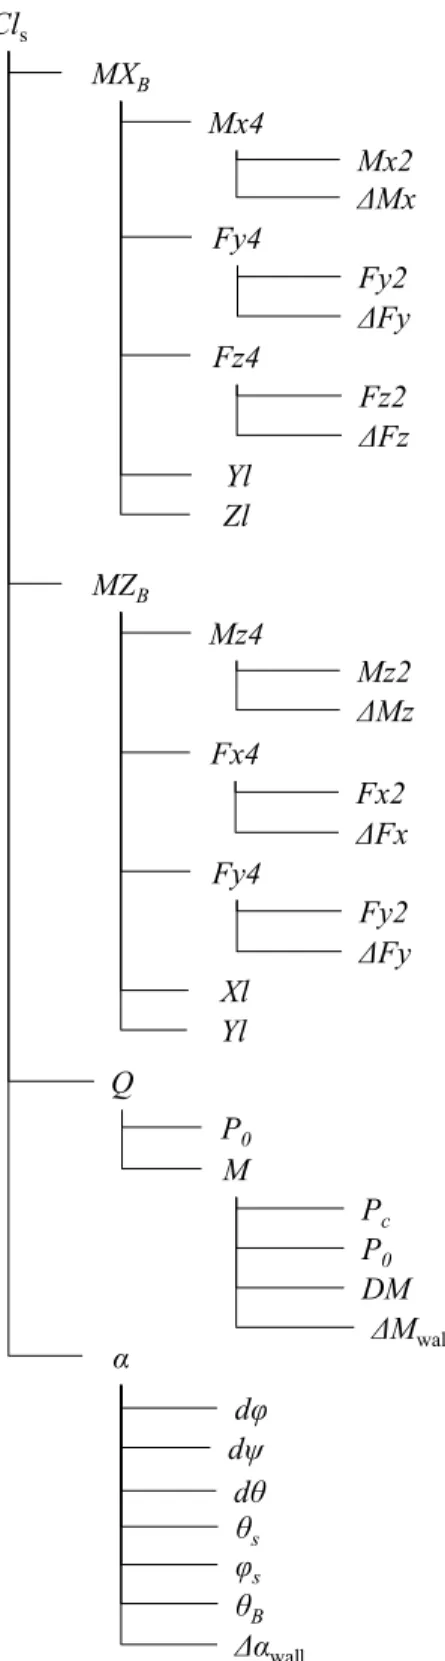 図 6  CLs における親変数→子変数展開構造 図 7  Cls における親変数→子変数展開構造ΔCAsupportFAFx4QΔFxFx2CLsP0MPcP0DMΔMwallFNFz4Fz2ΔFzdφdψdθαθsφsθBΔαwallMXBMx4QΔMxMx2ClsP0MPcP0DMΔMwallFz4Fz2ΔFzdφdψdθαθsφsθBΔαwallFy4ΔFyFy2YlZlMZBMz4ΔMzMz2Fy4Fy2ΔFyFx4ΔFxFx2XlYl